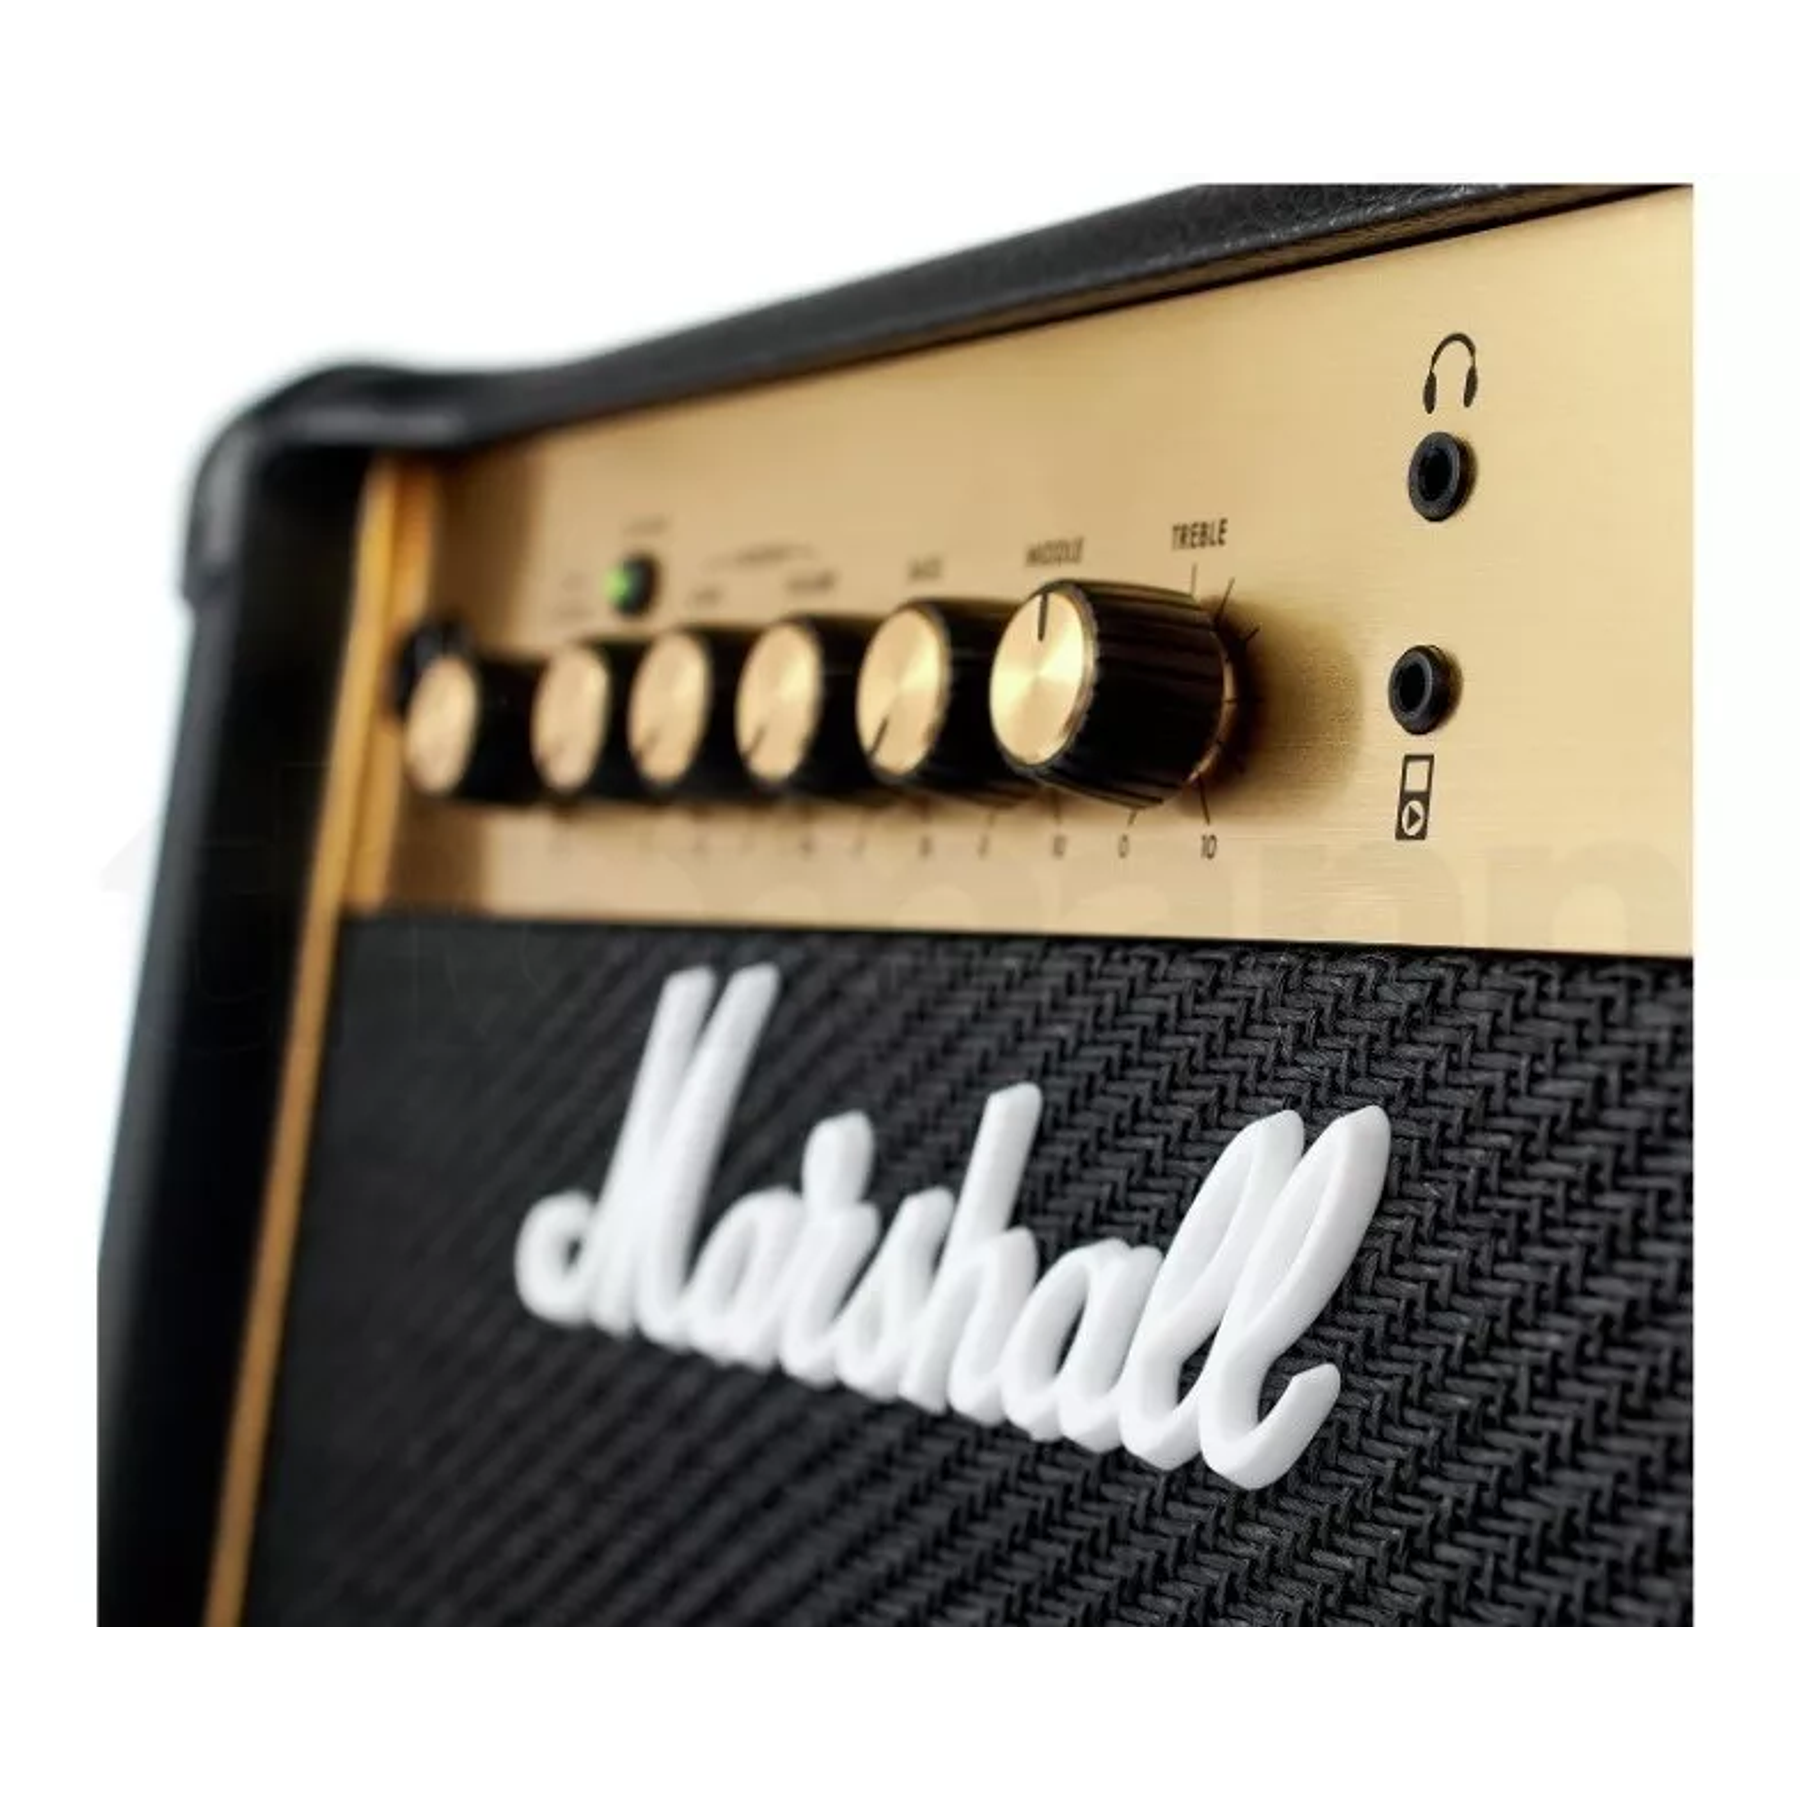 Mg15 Gold Amplificador Marshall